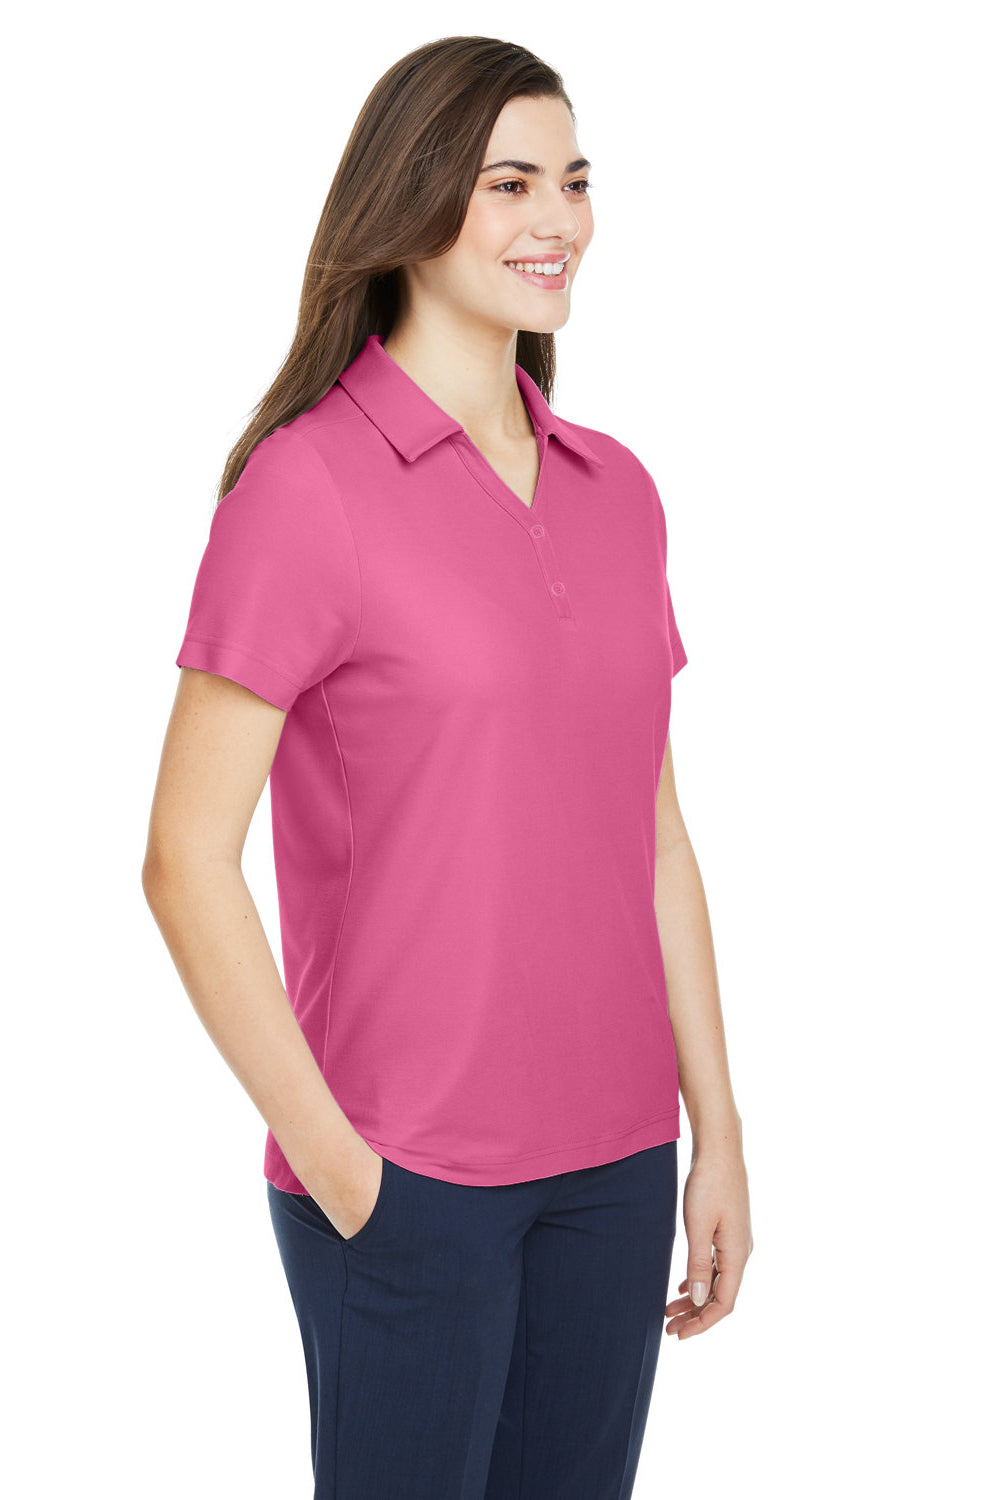 Core 365 CE112W Womens Fusion ChromaSoft Performance Moisture Wicking Pique Short Sleeve Polo Shirt Charity Pink 3Q